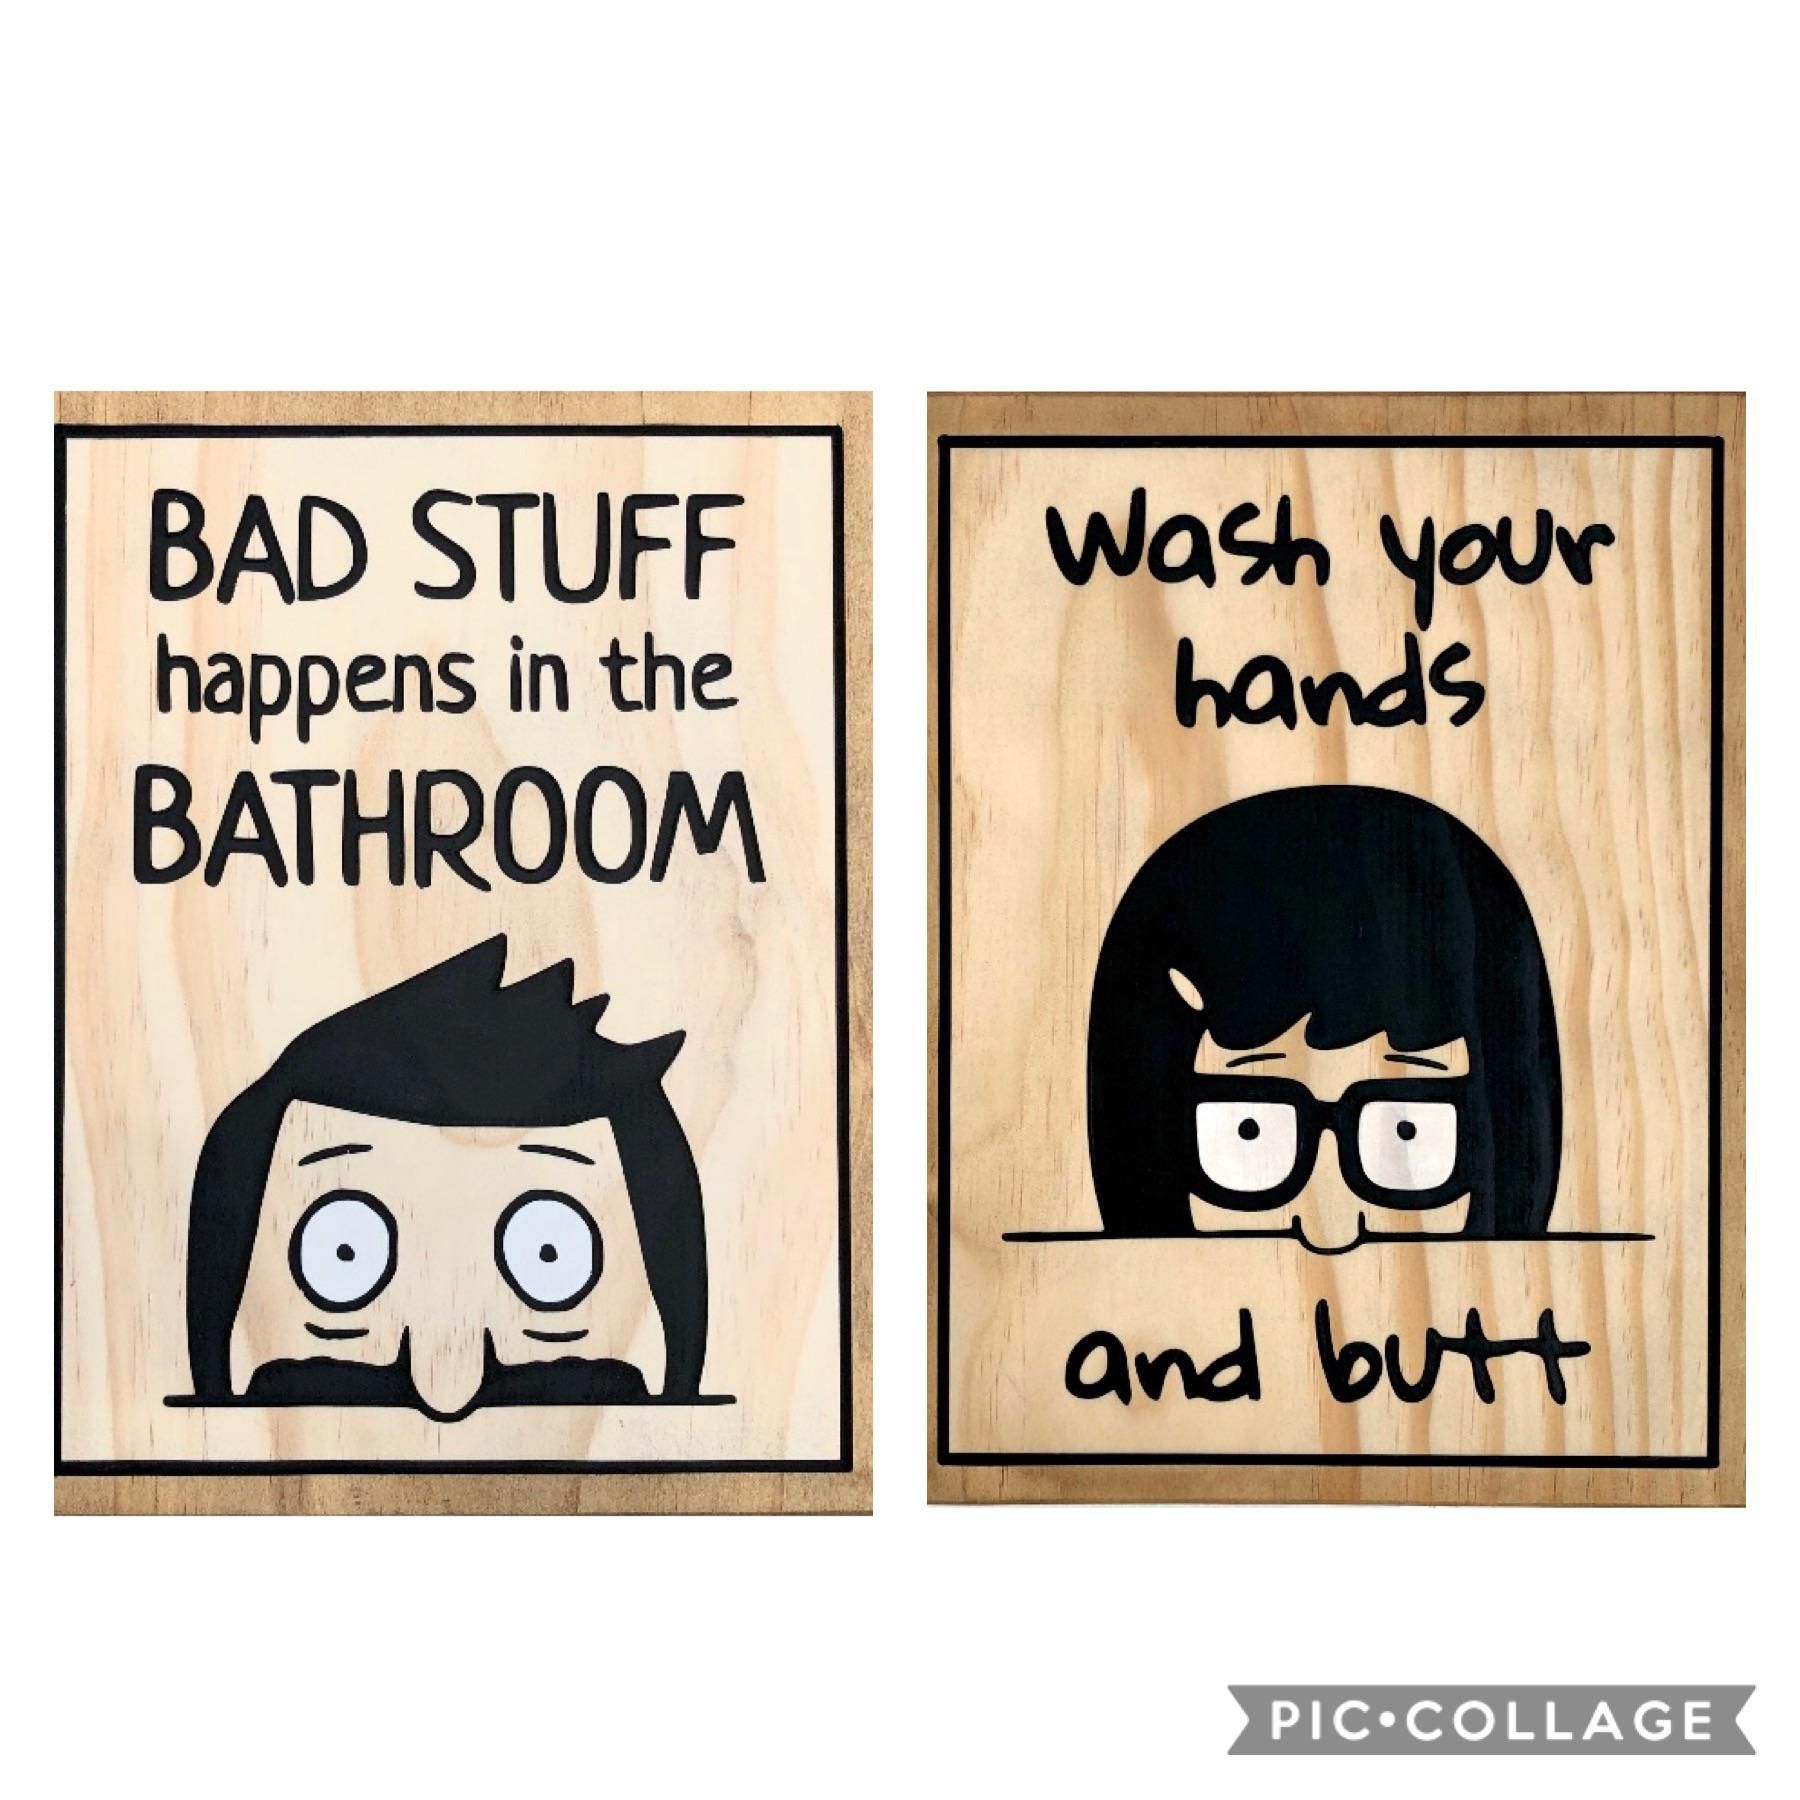 My new bathroom art!